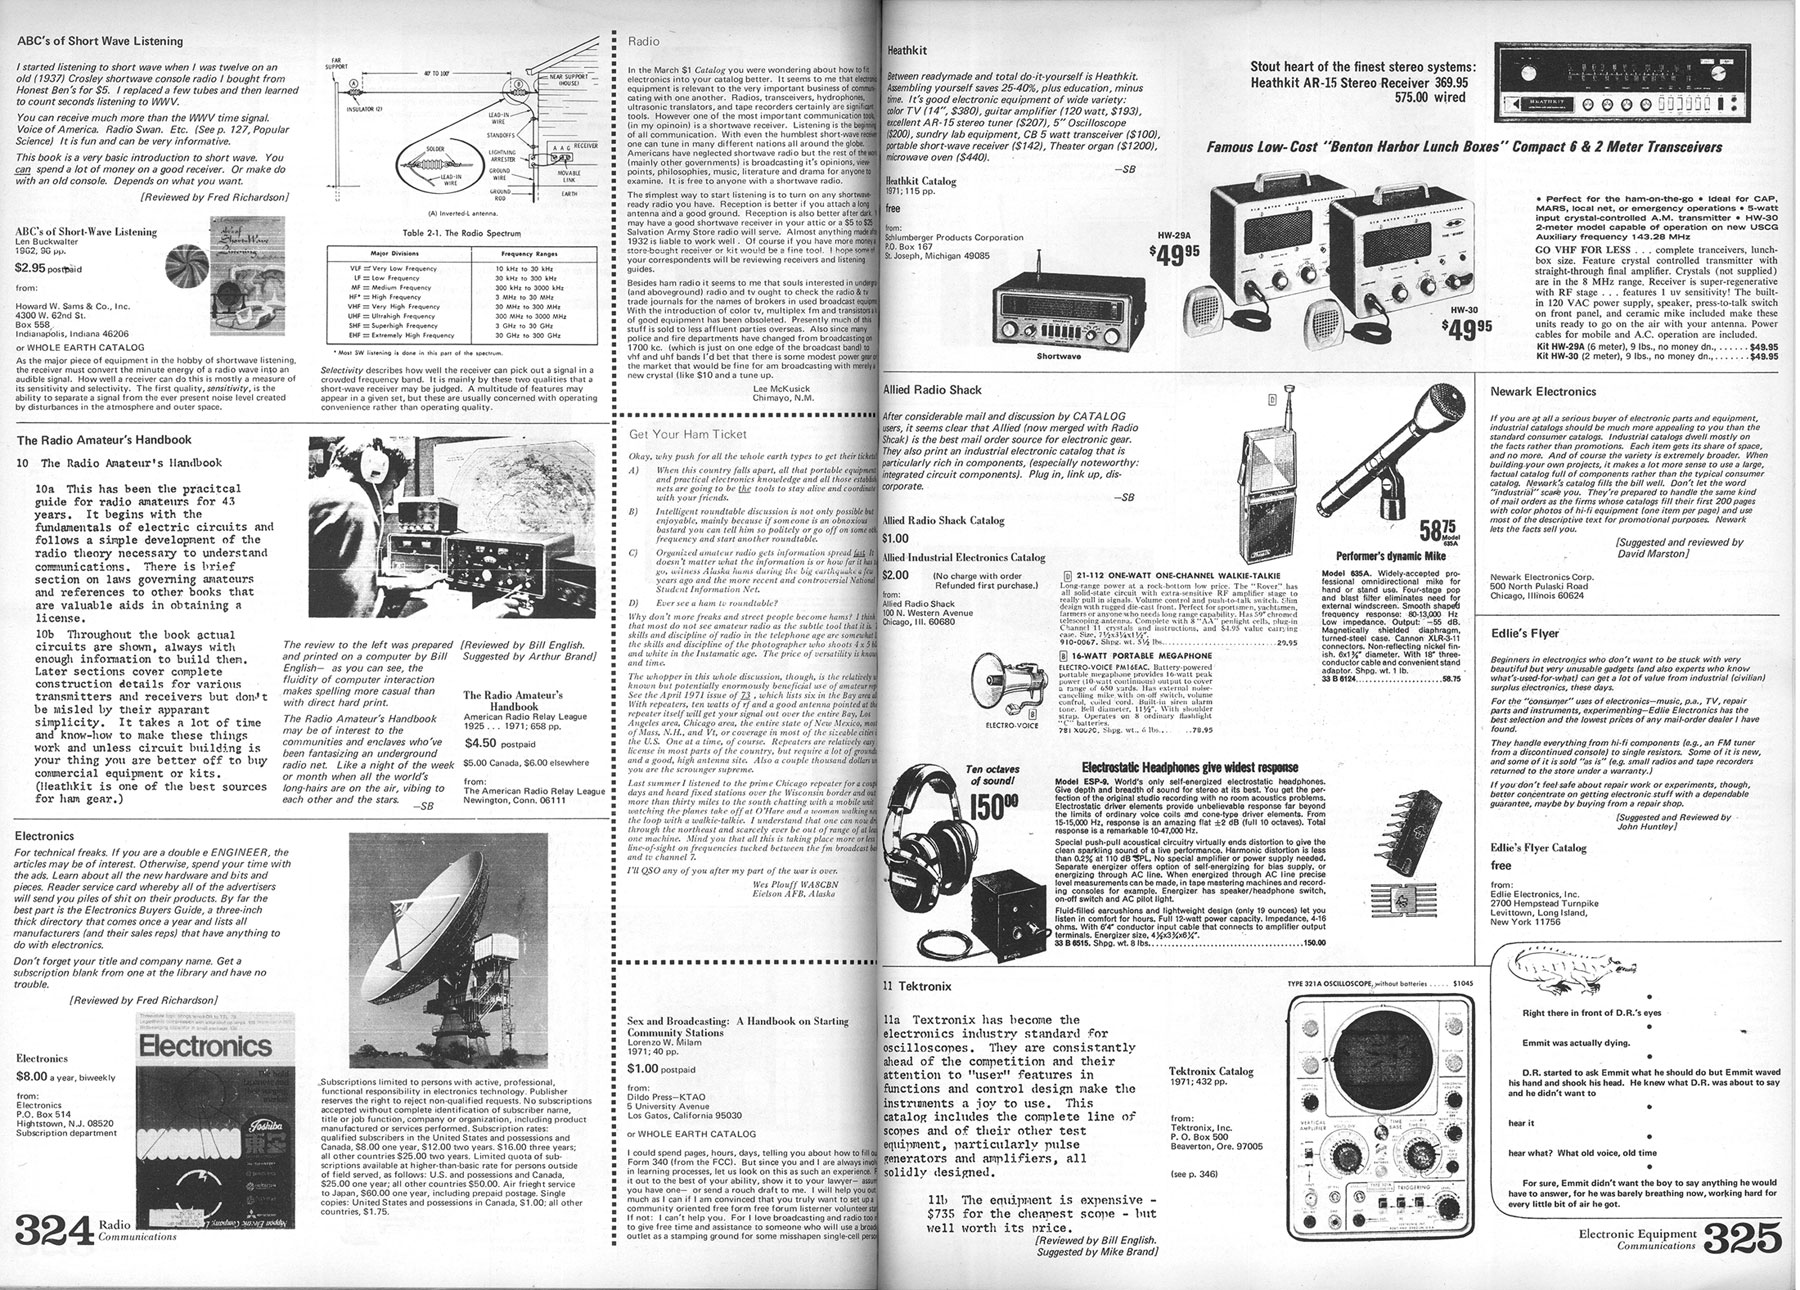 Whole Earth Catalog Steward Brand 1969